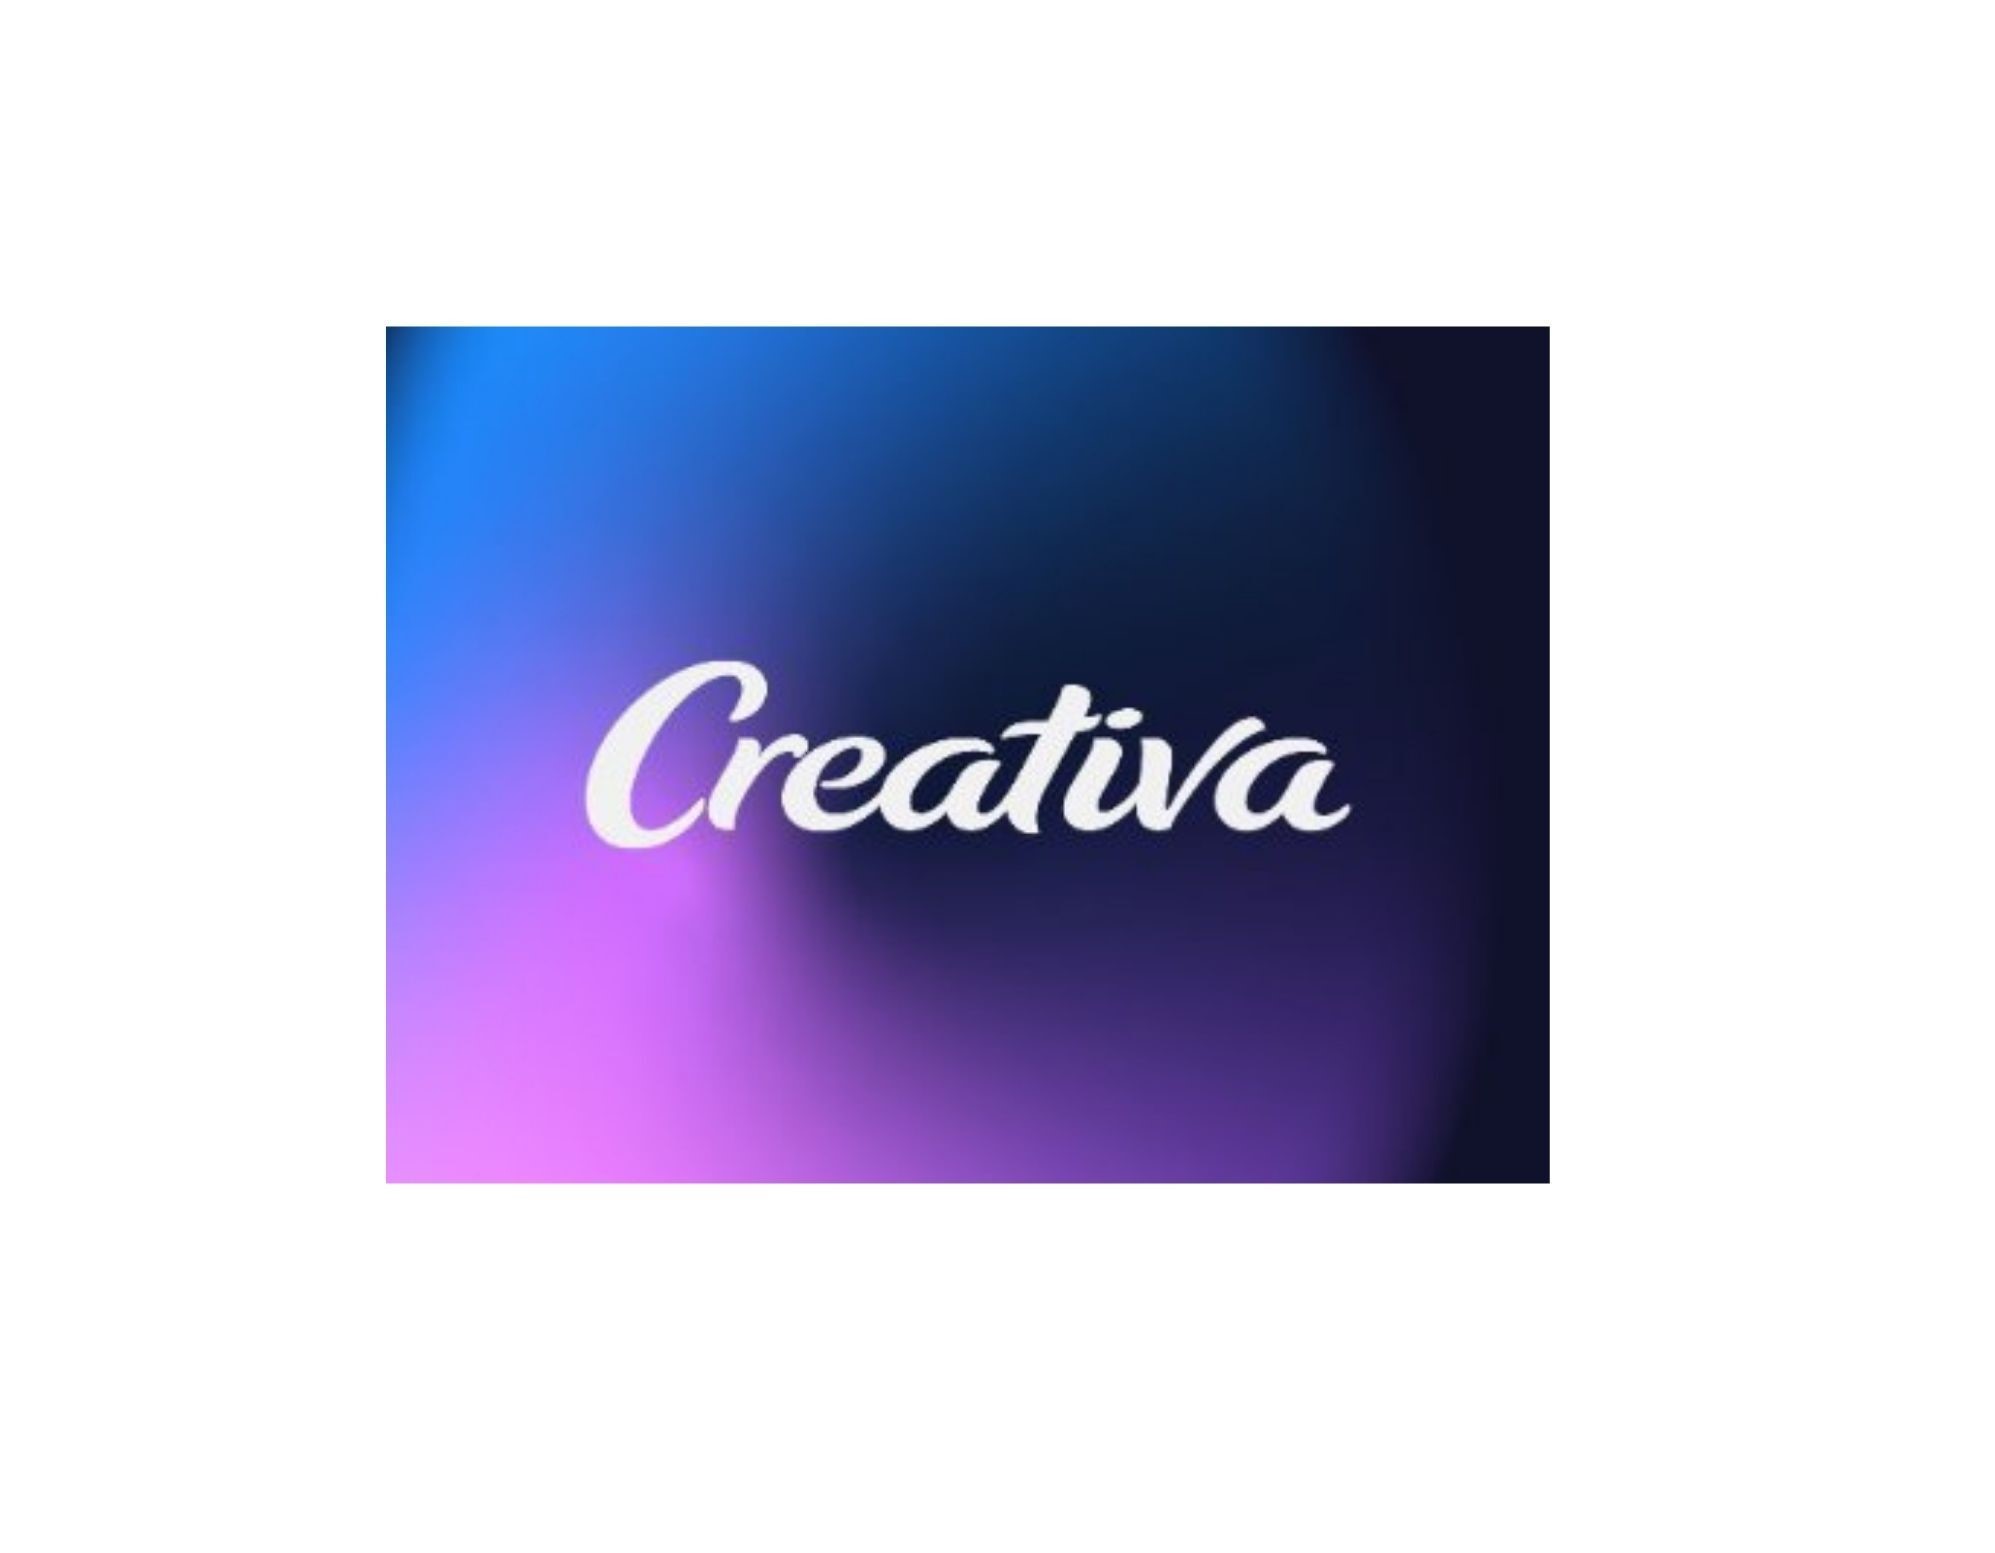 Creativa Video Production & Animation Studio